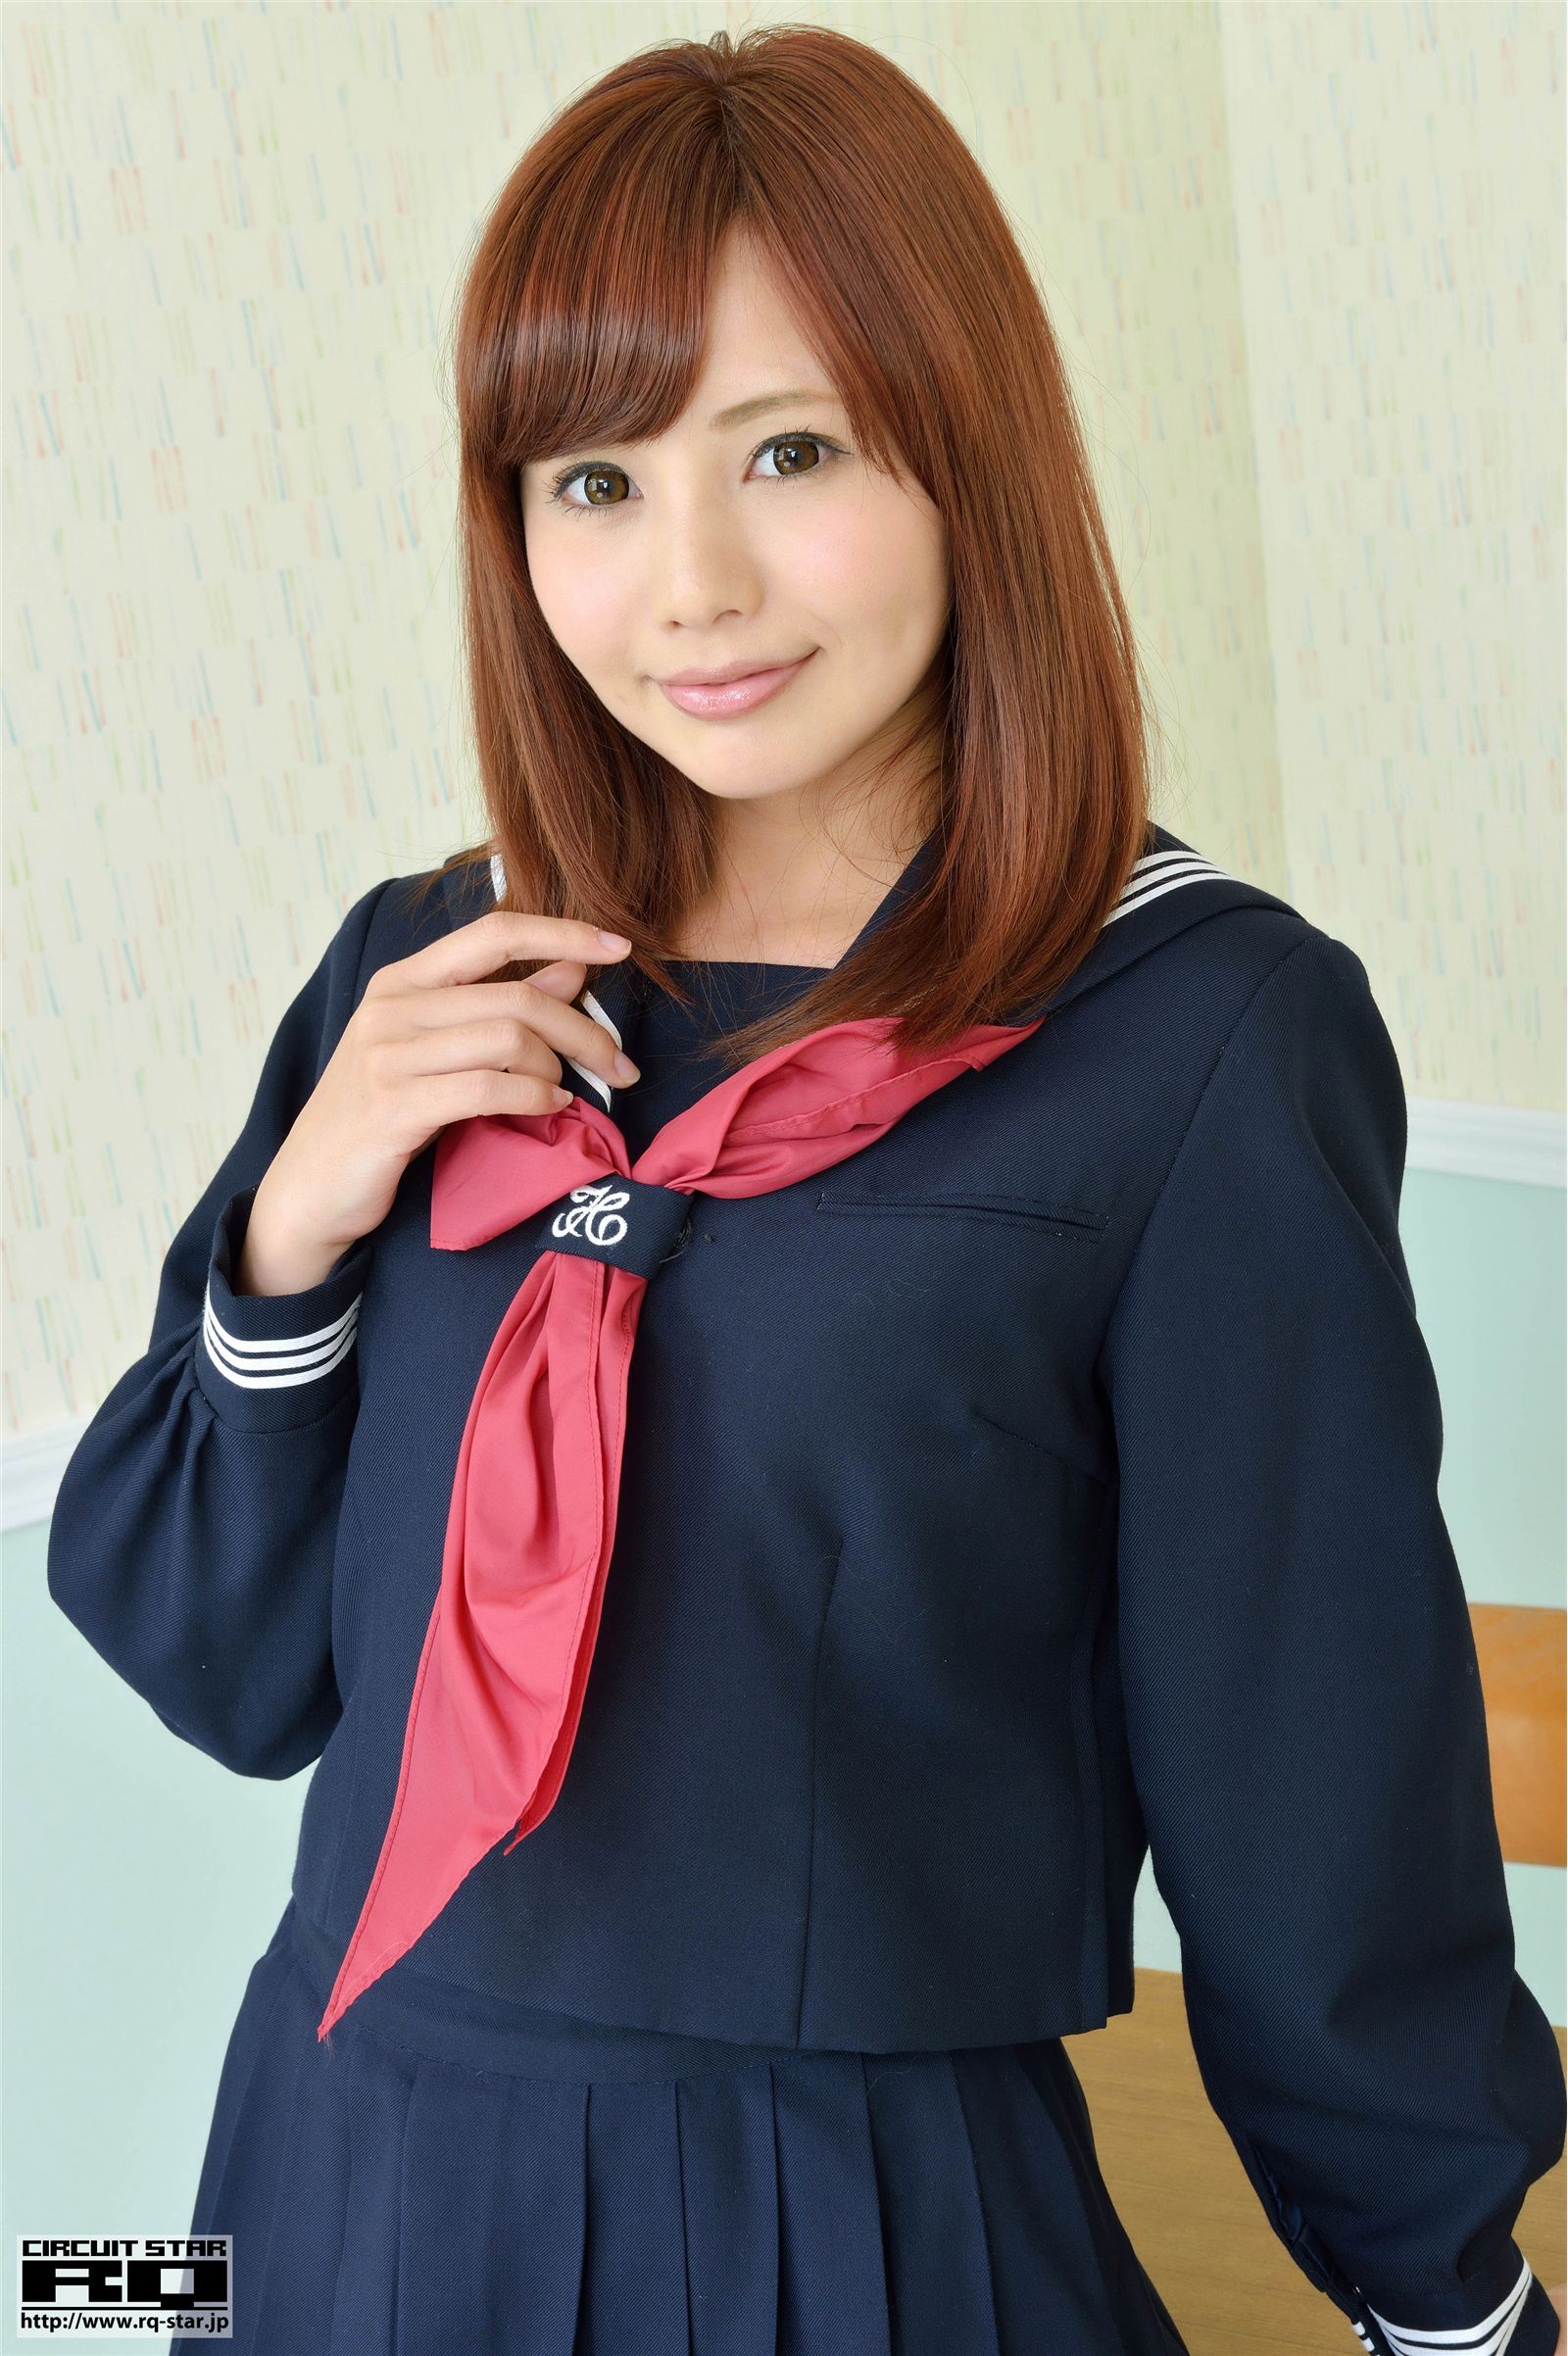 [rq-star] 2015.05.29 no.01014 Chihiro Andou Ando school girl